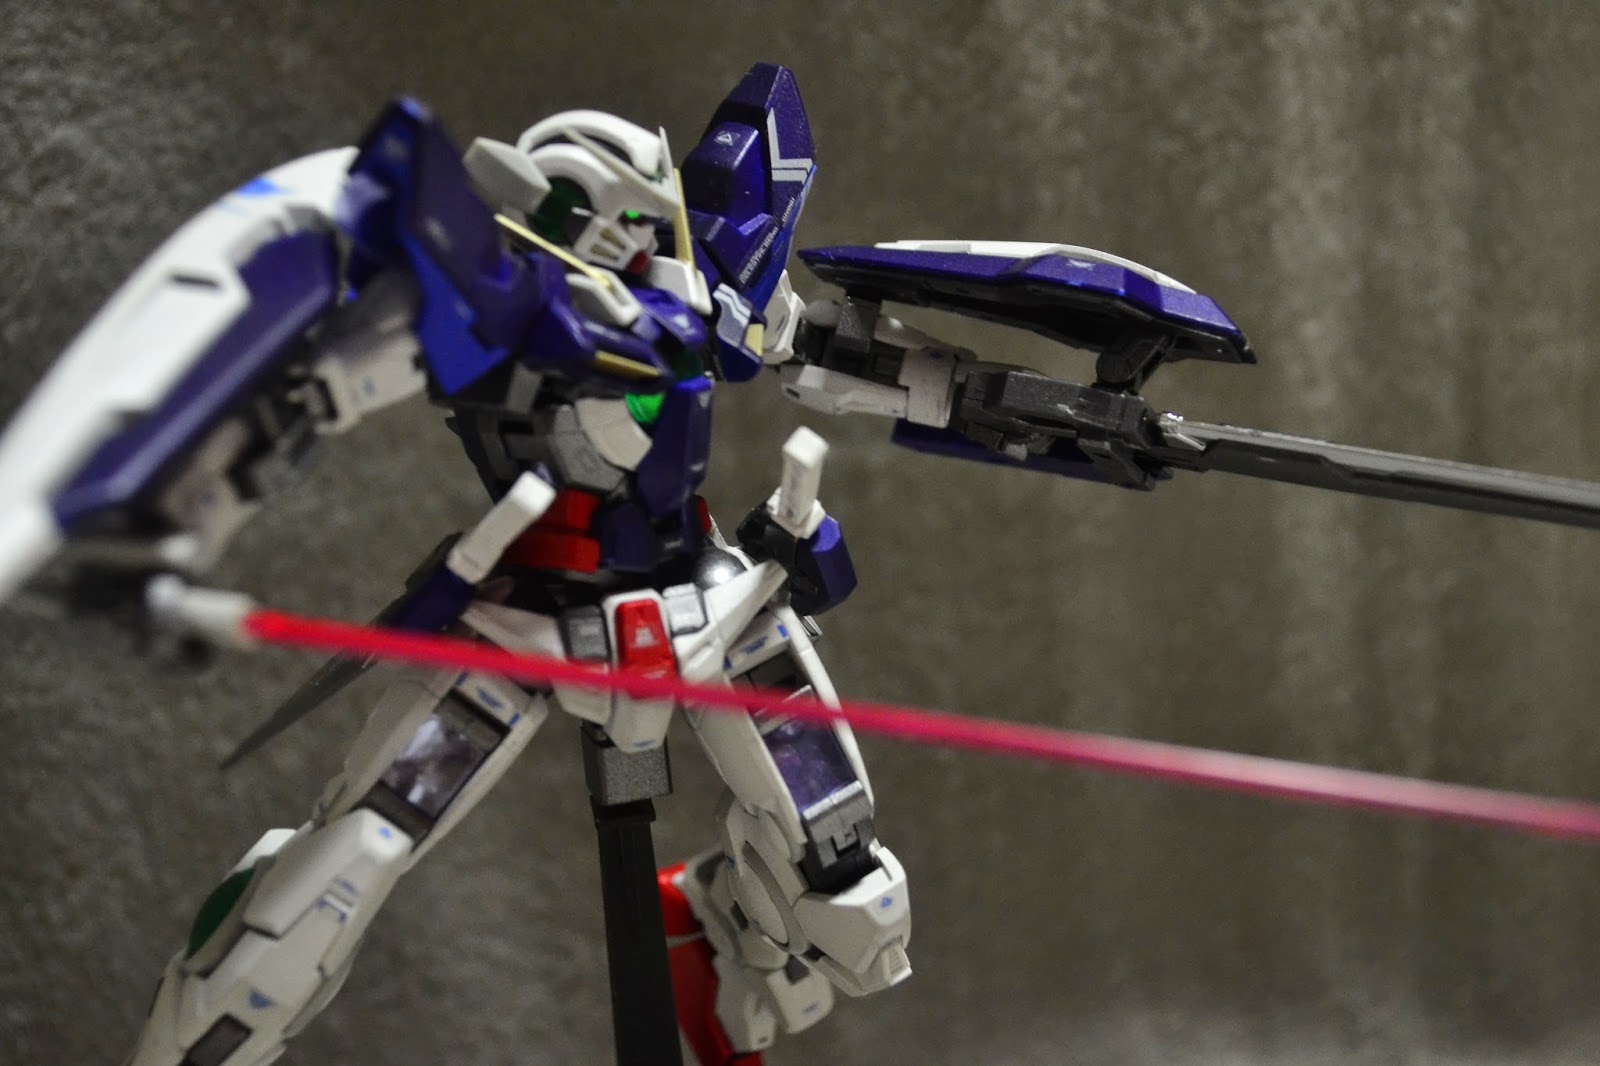 The Ultimate Guide To Building Gundam Plastic Models AKA Gunpla